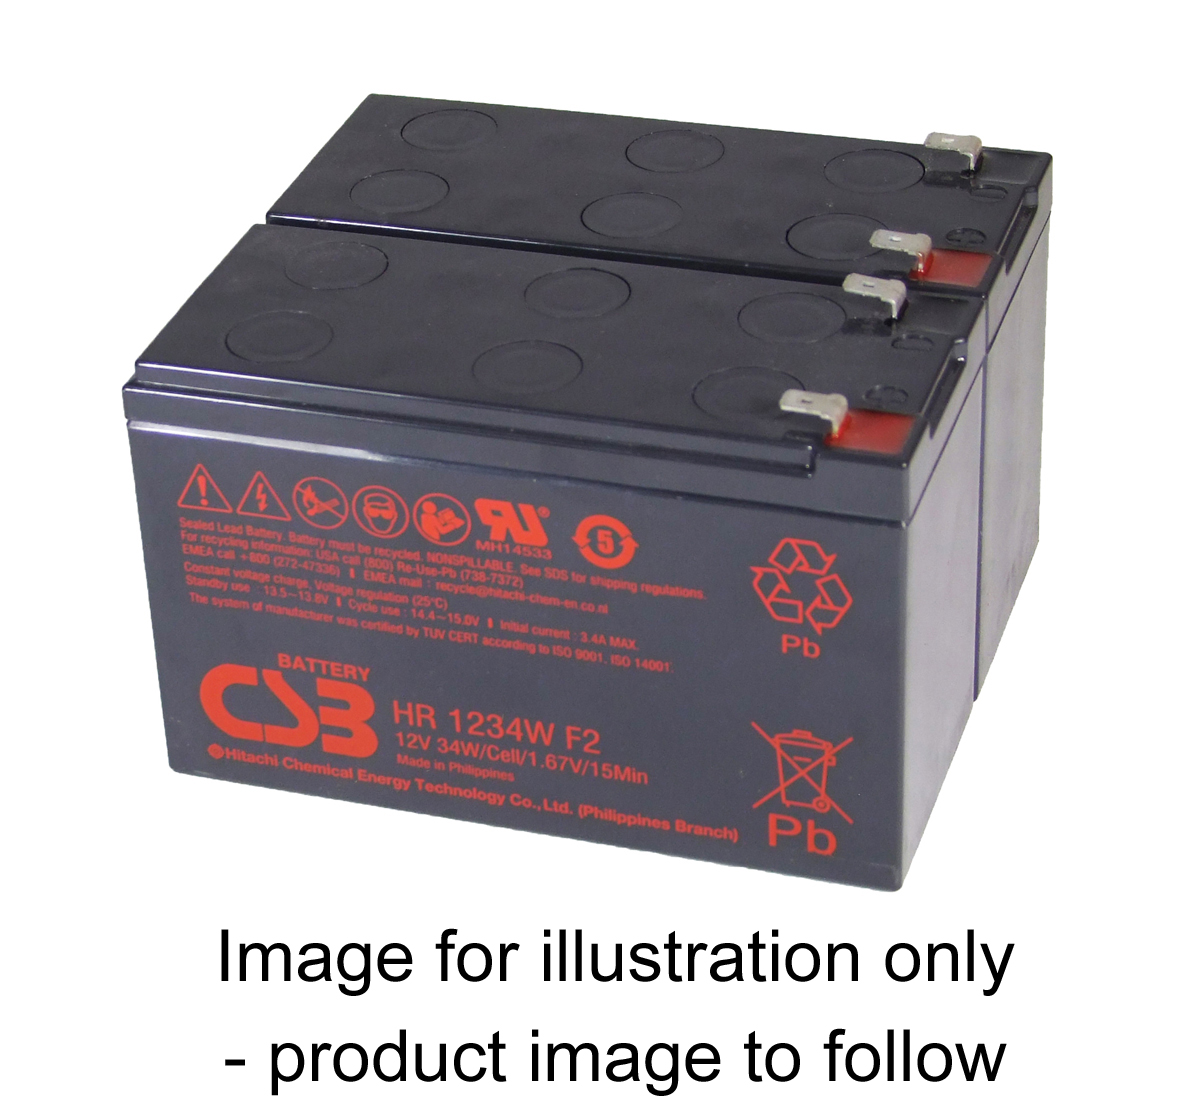 MDSV202 UPS Battery Kit - Replaces APC RBCV202